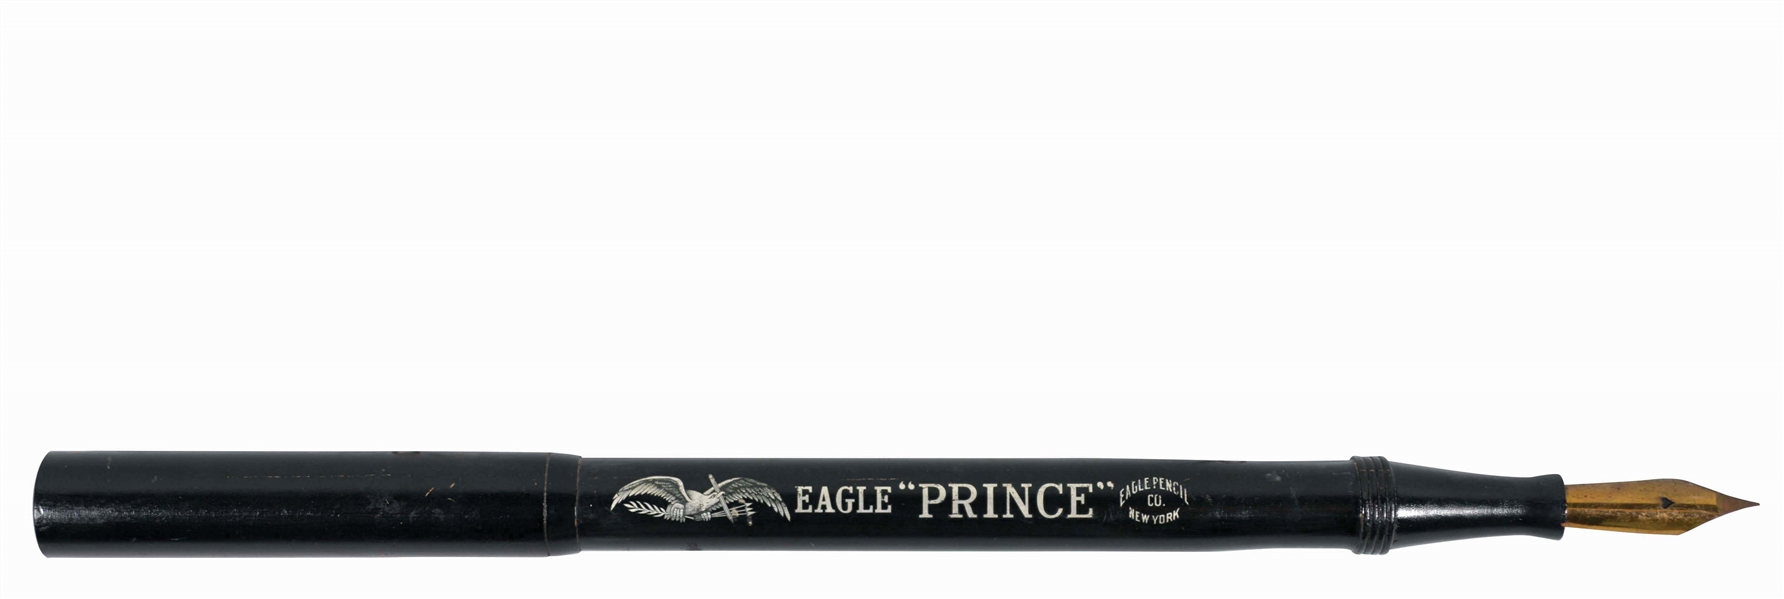 EAGLE PENCIL CO. "PRINCE" FIGURAL PEN ADVERTISING SIGN.